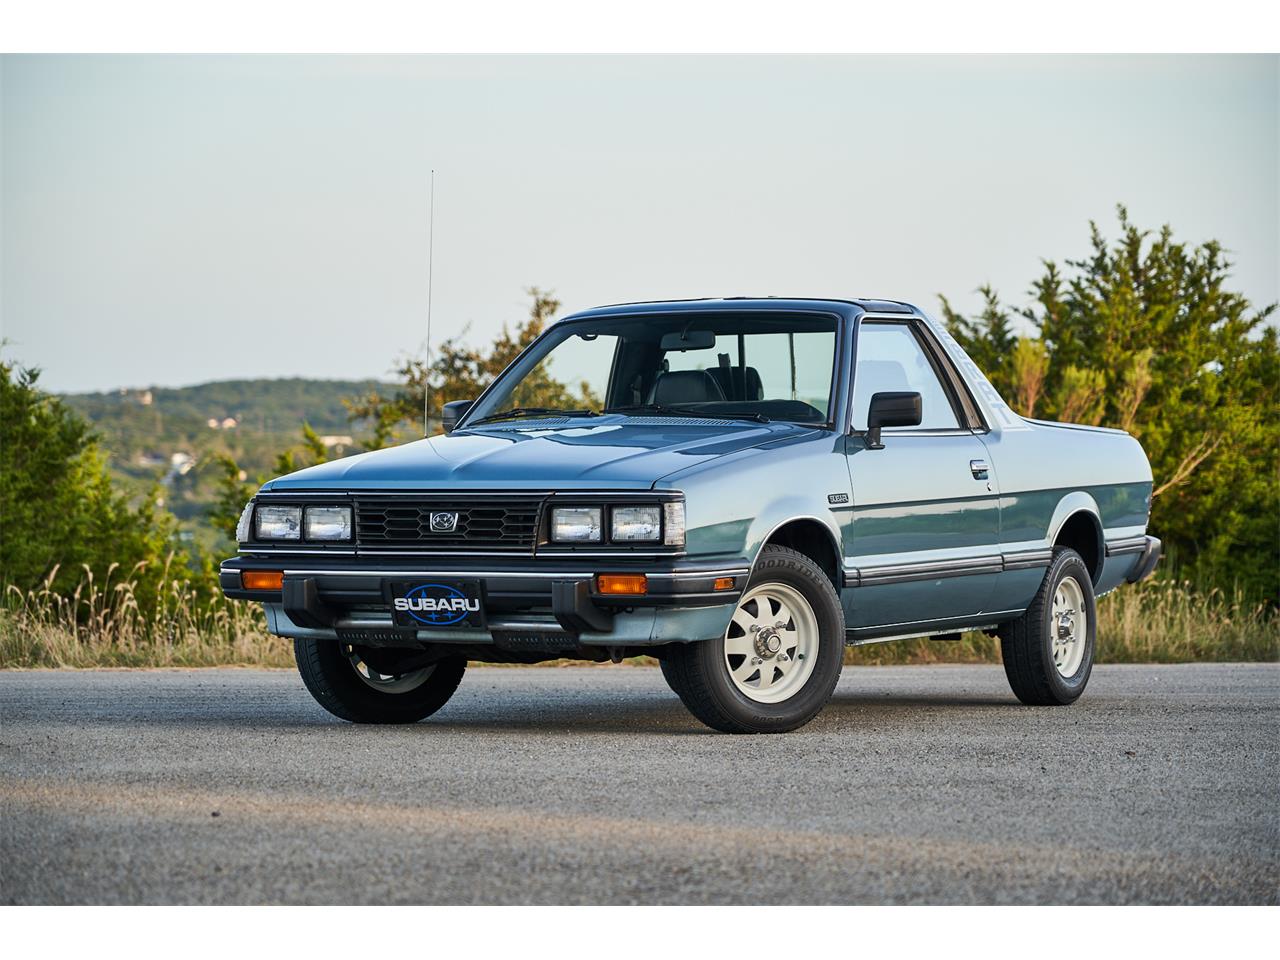 For Sale at Auction: 1986 Subaru Brat in Austin, Texas.